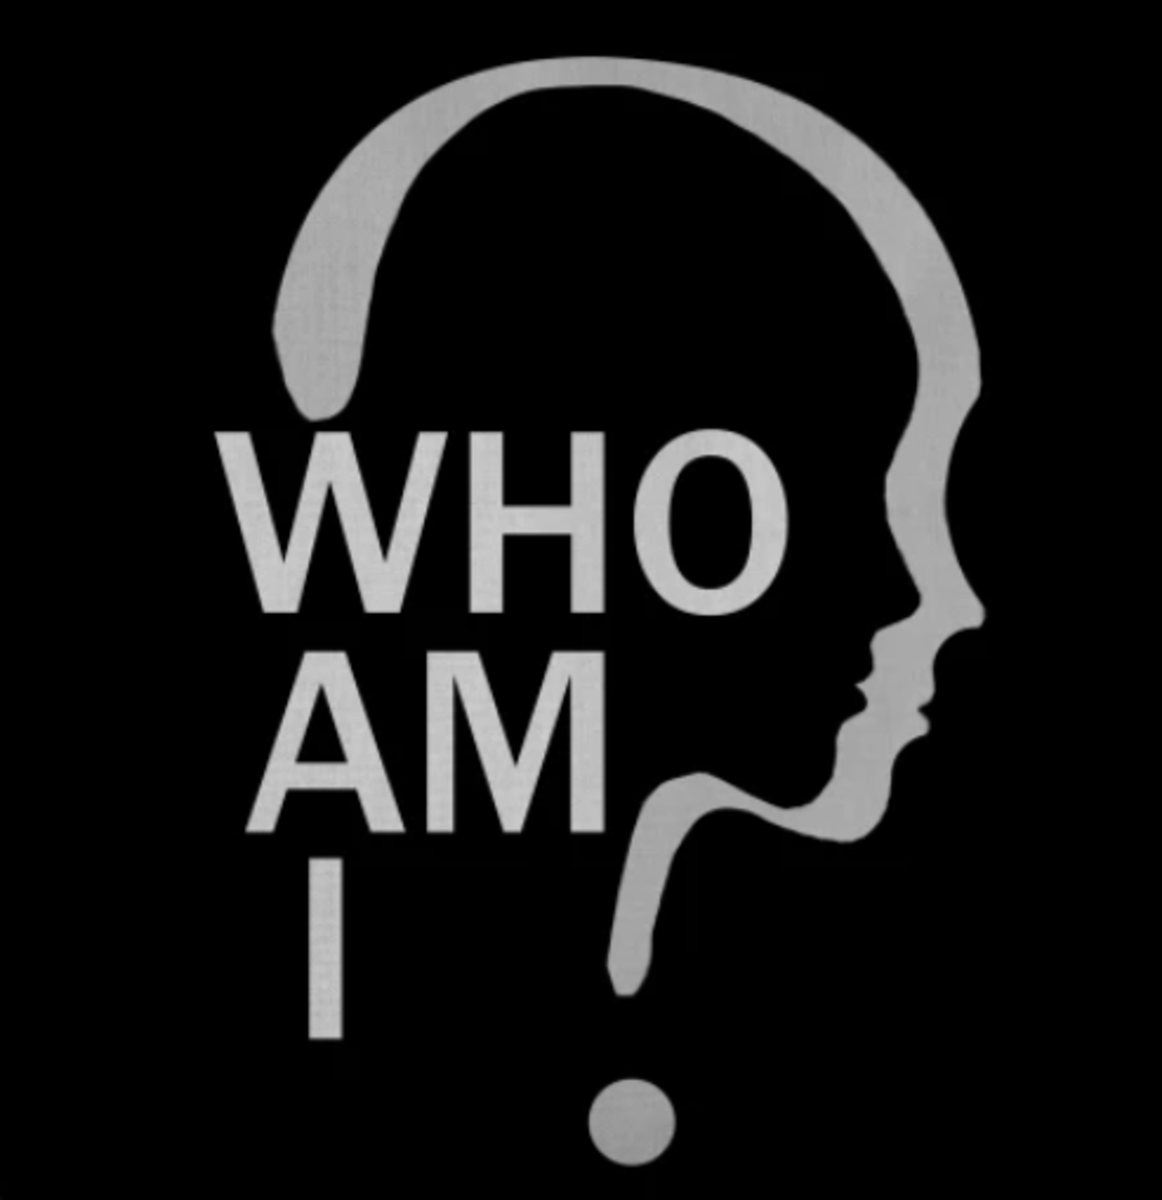 Who am I? Explaining myself with the ABC challenge.